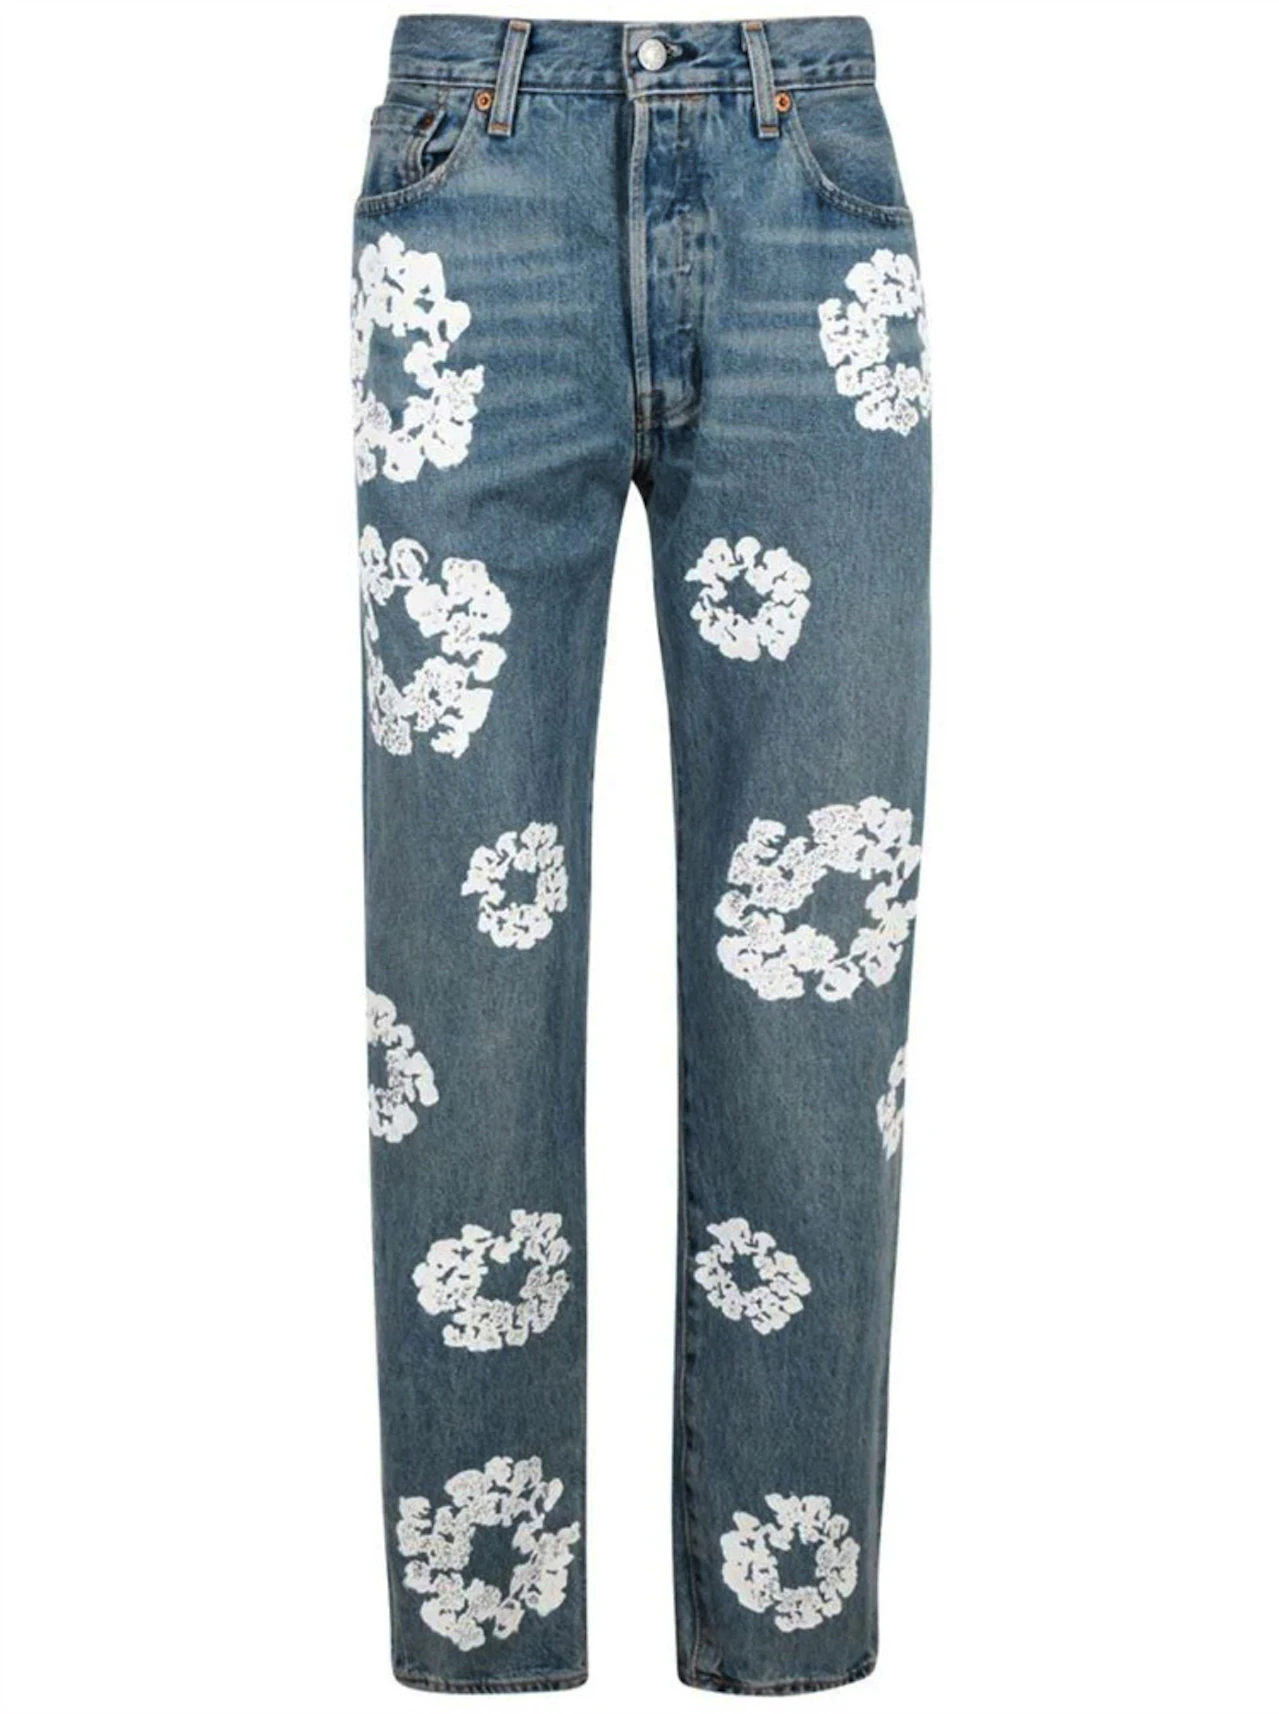 Actualizar 39+ imagen levi’s jeans with flowers